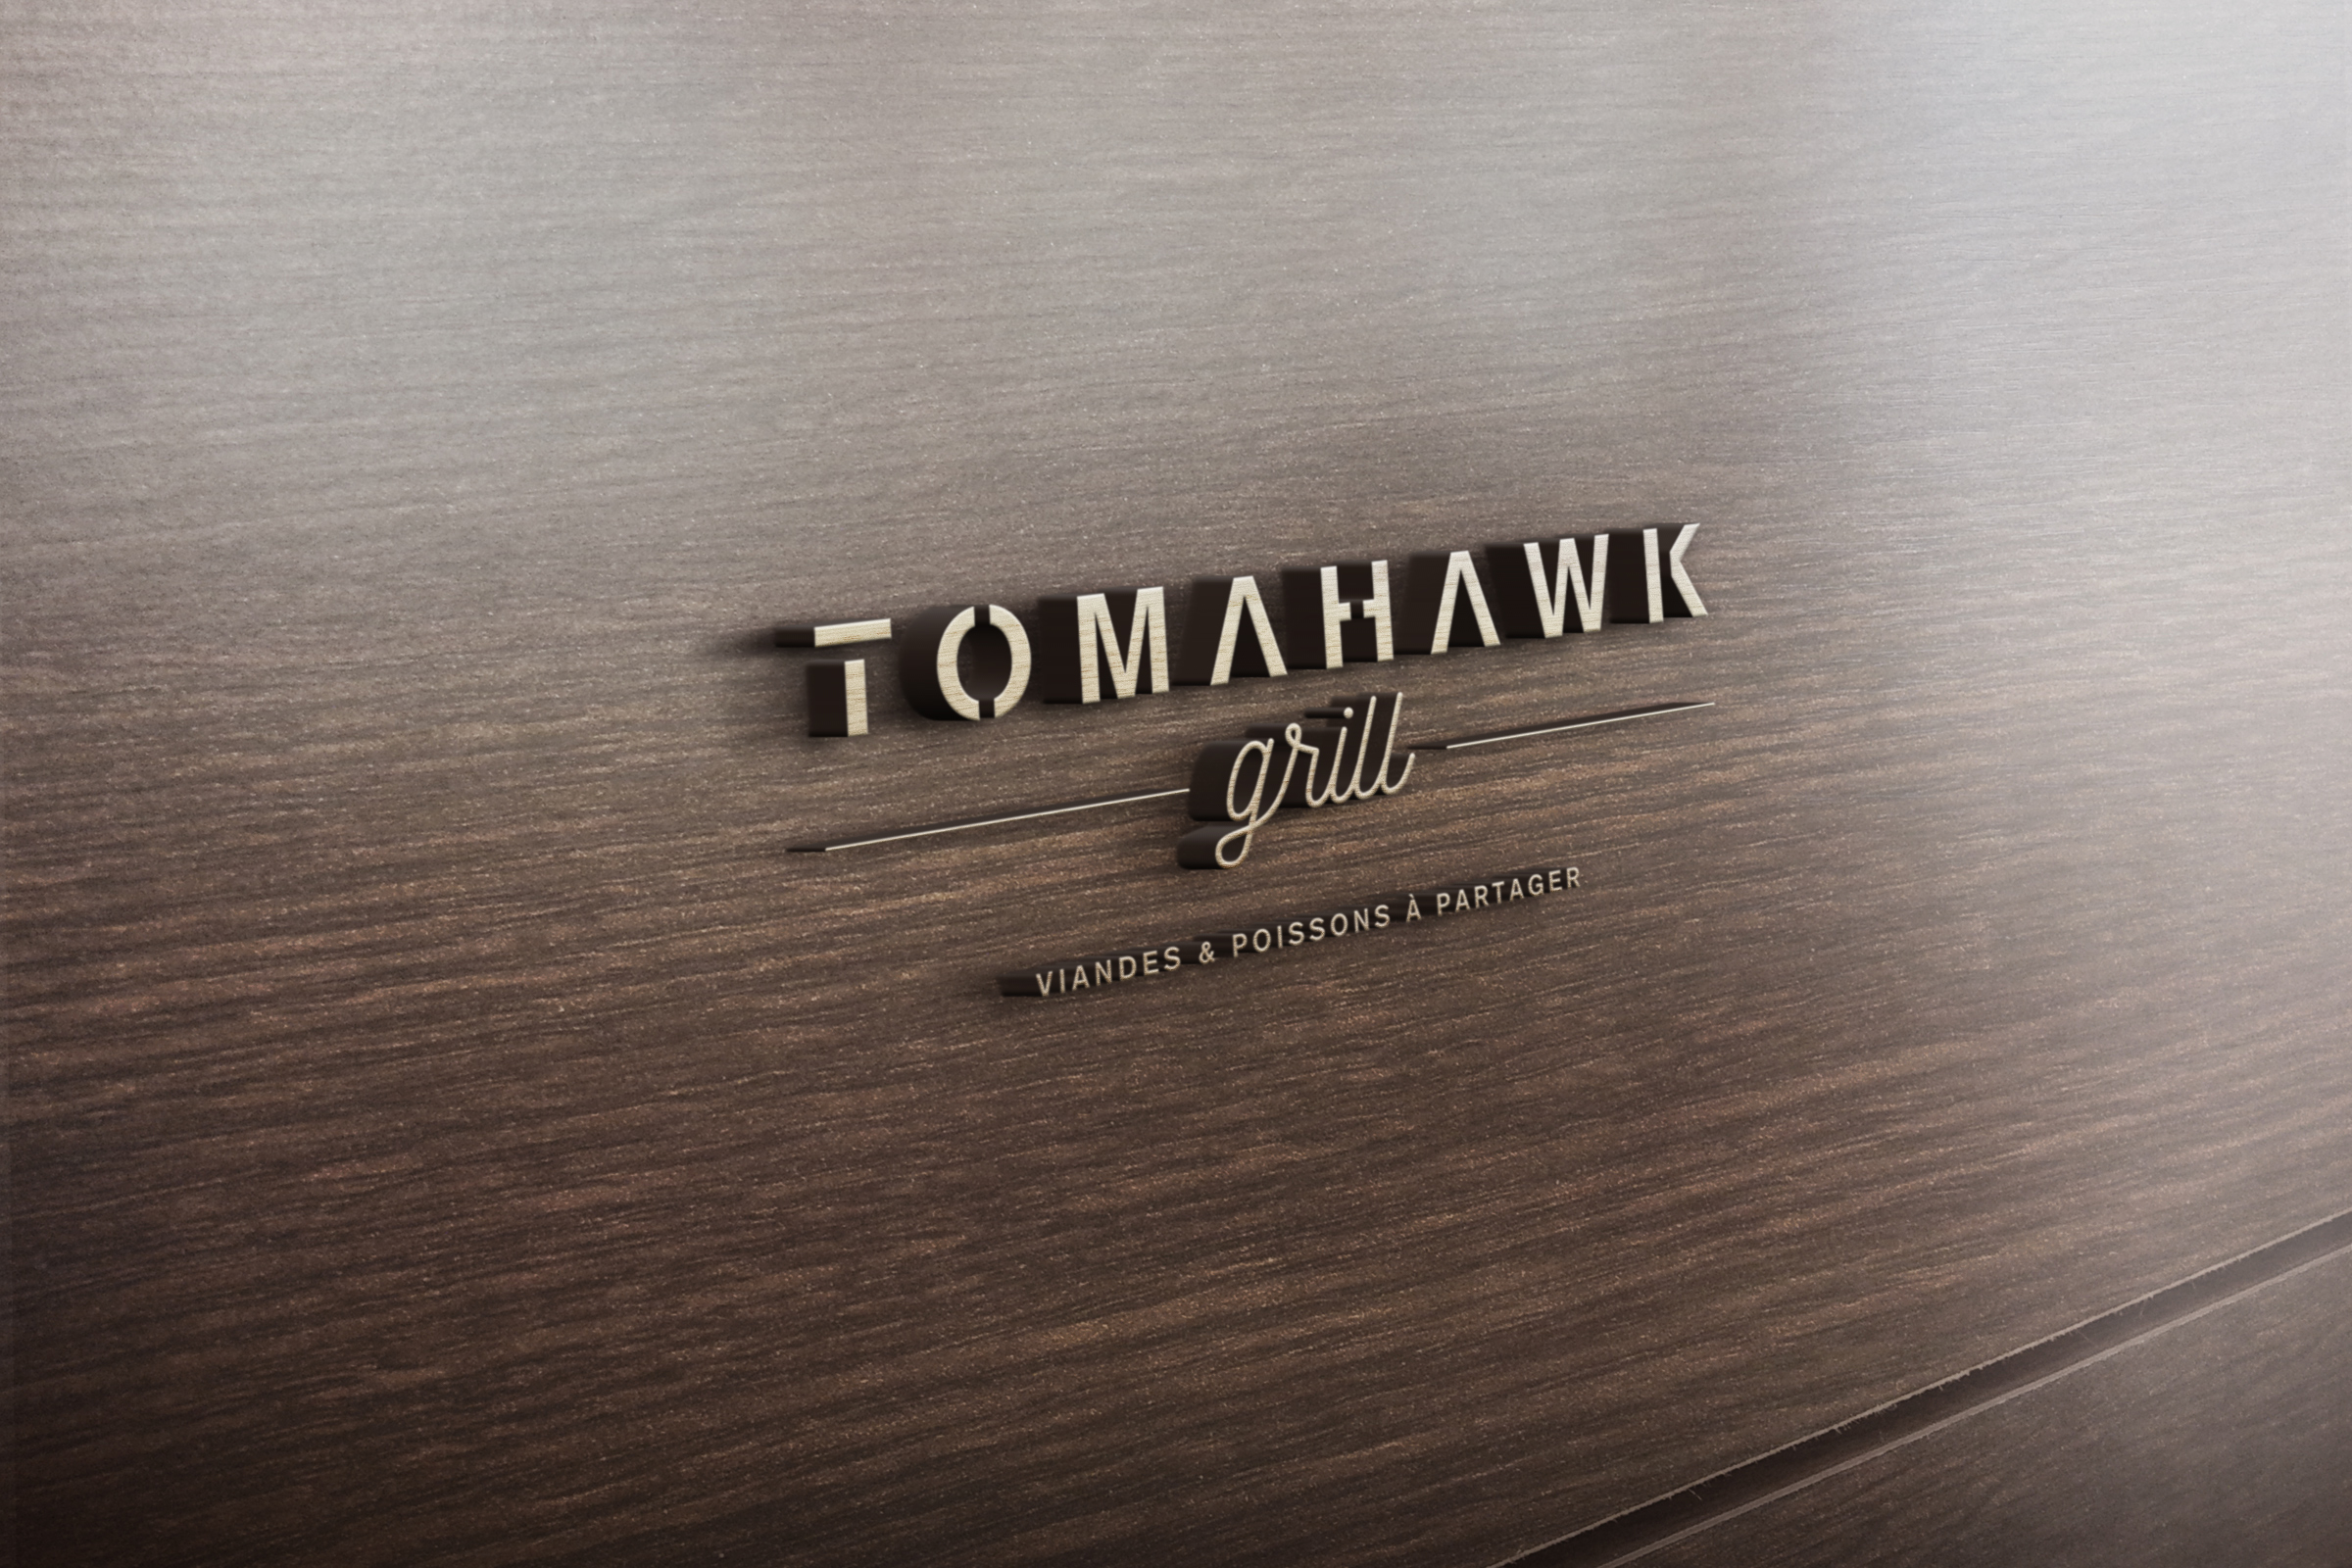 Tomahawk Grill par Valfeltõ